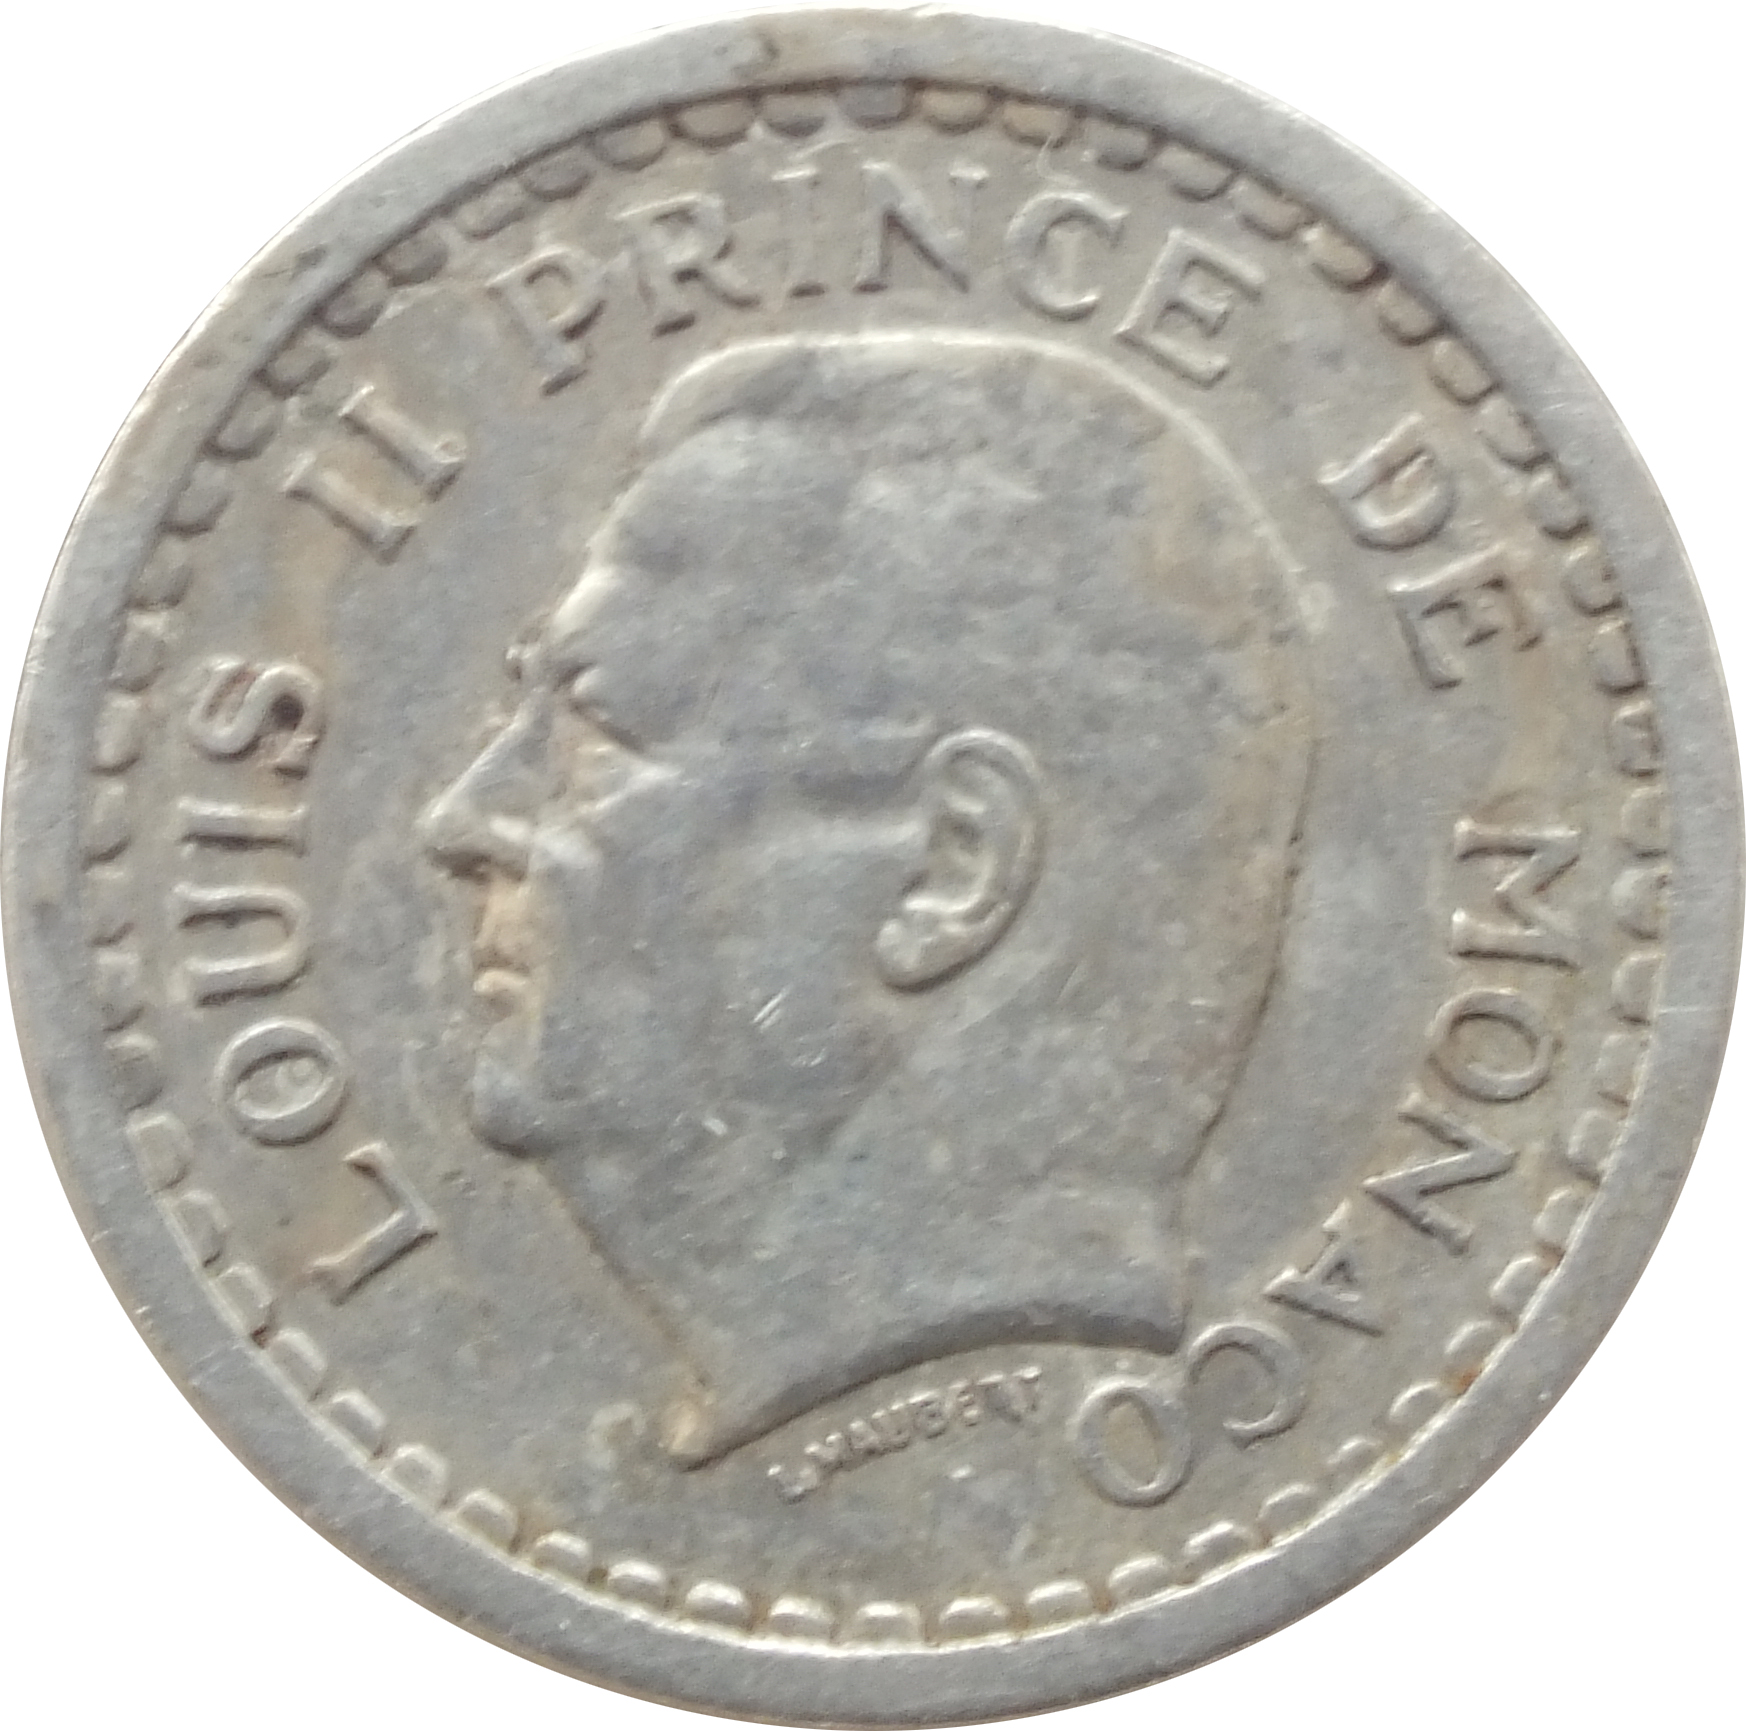 1 Franc - Louis II (1943) Monaco KM# 120 - CoinsBook